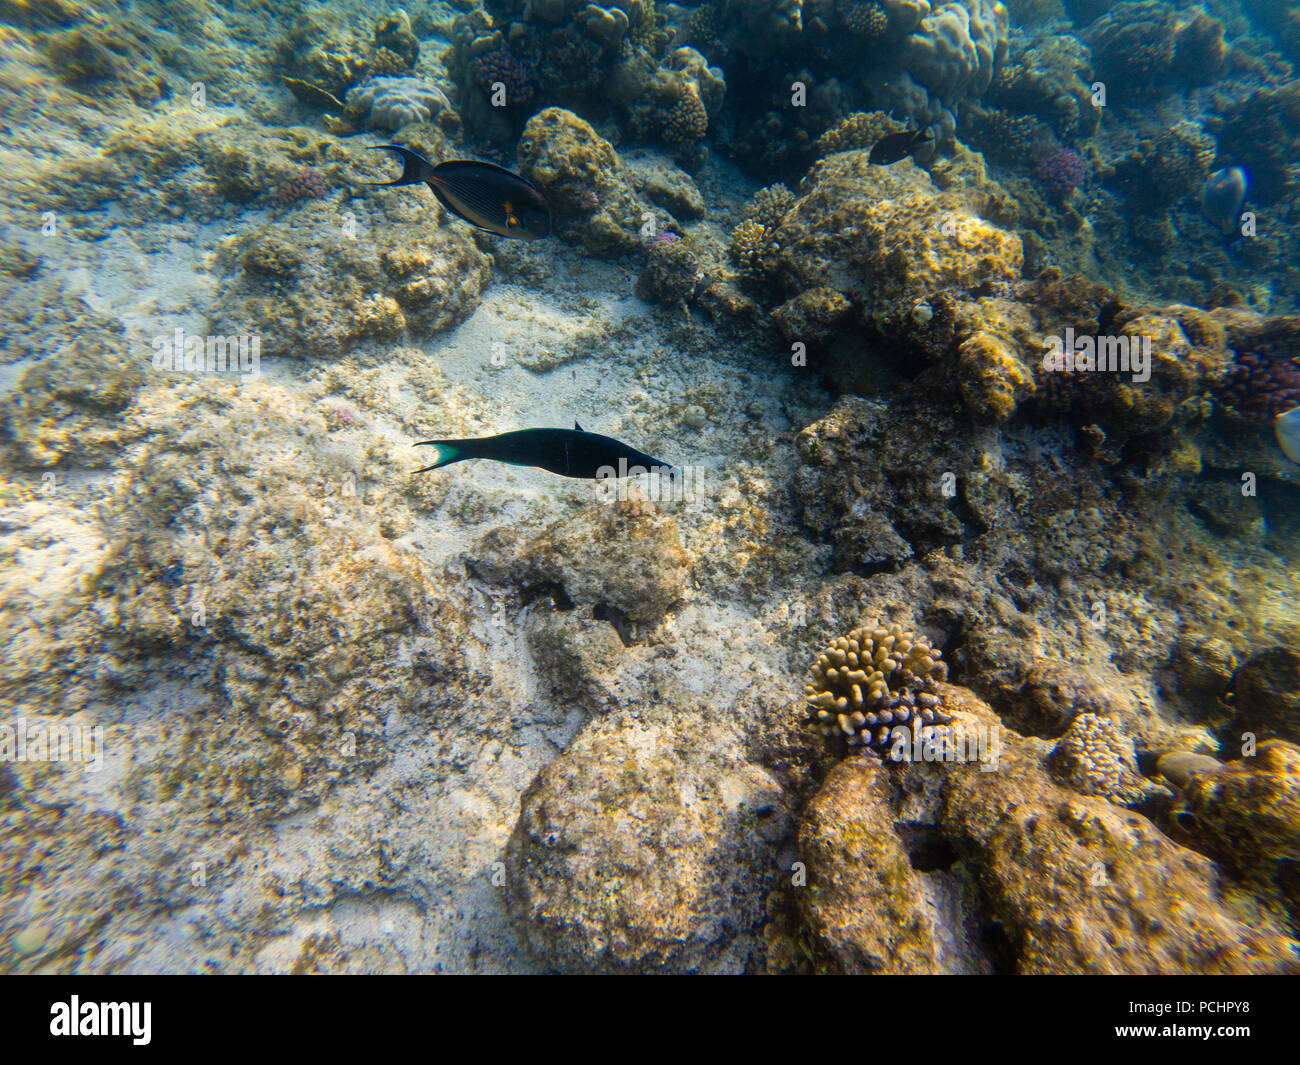 Gnathonemus petersii - Elephant nosed fish, Red Sea - Egypt, Makadi Bay Stock Photo